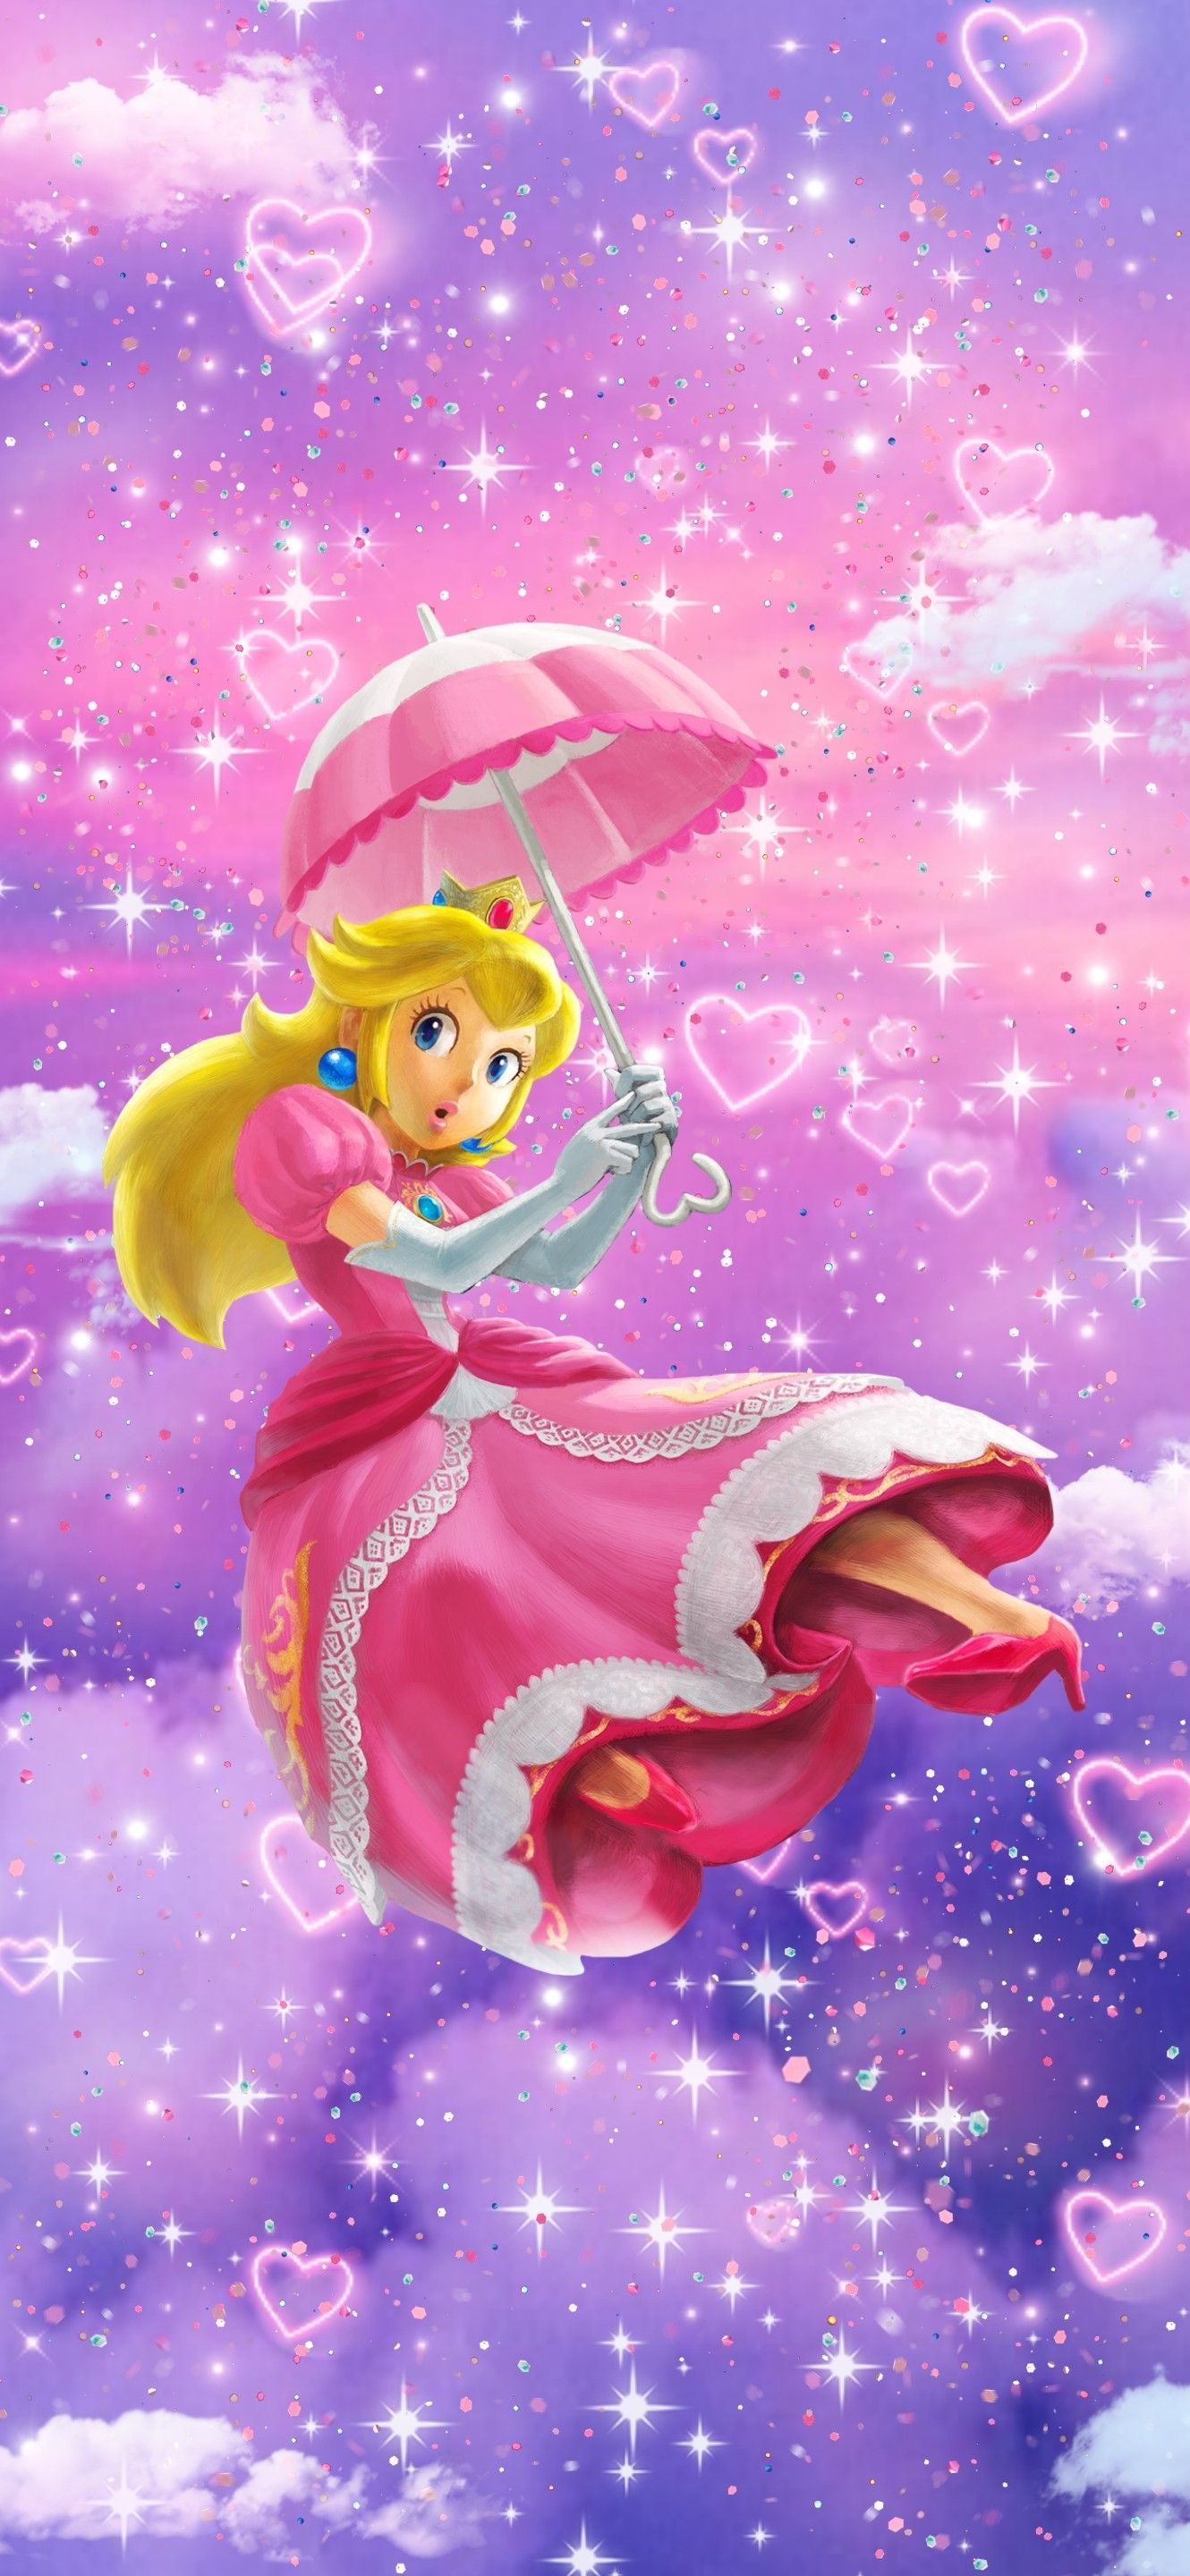 Nintendo Princess Peach aesthetic pink phone wallpaper. Peach wallpaper, Nintendo princess, Cute wallpaper